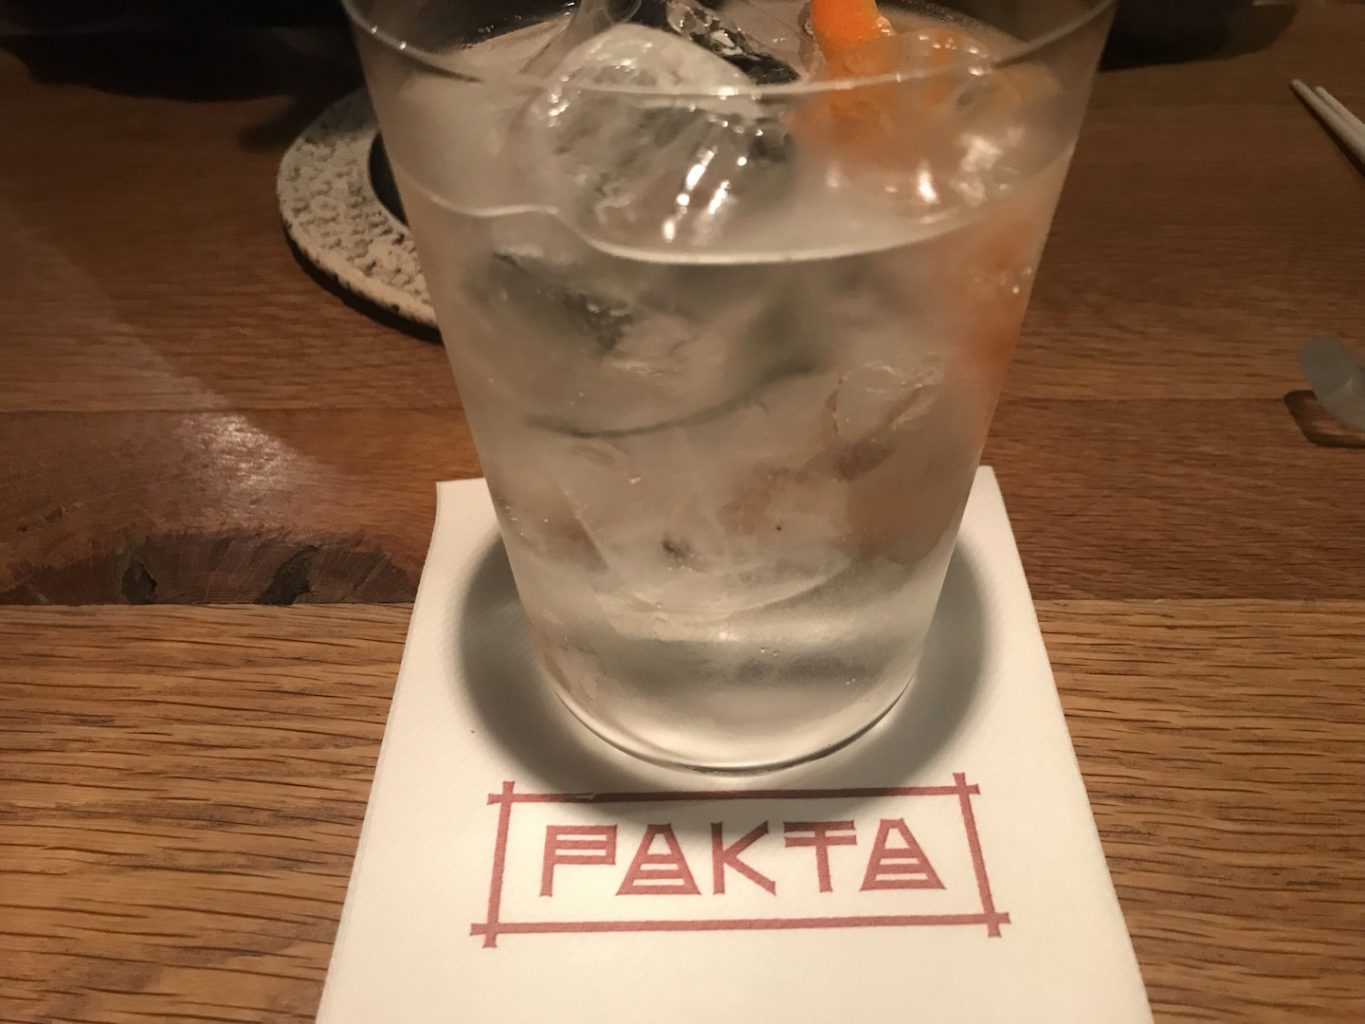 Cocktail, Sake, Pakta, Jorge Muñoz, Albert Adrià, Barcellona, Spagna, Michelin